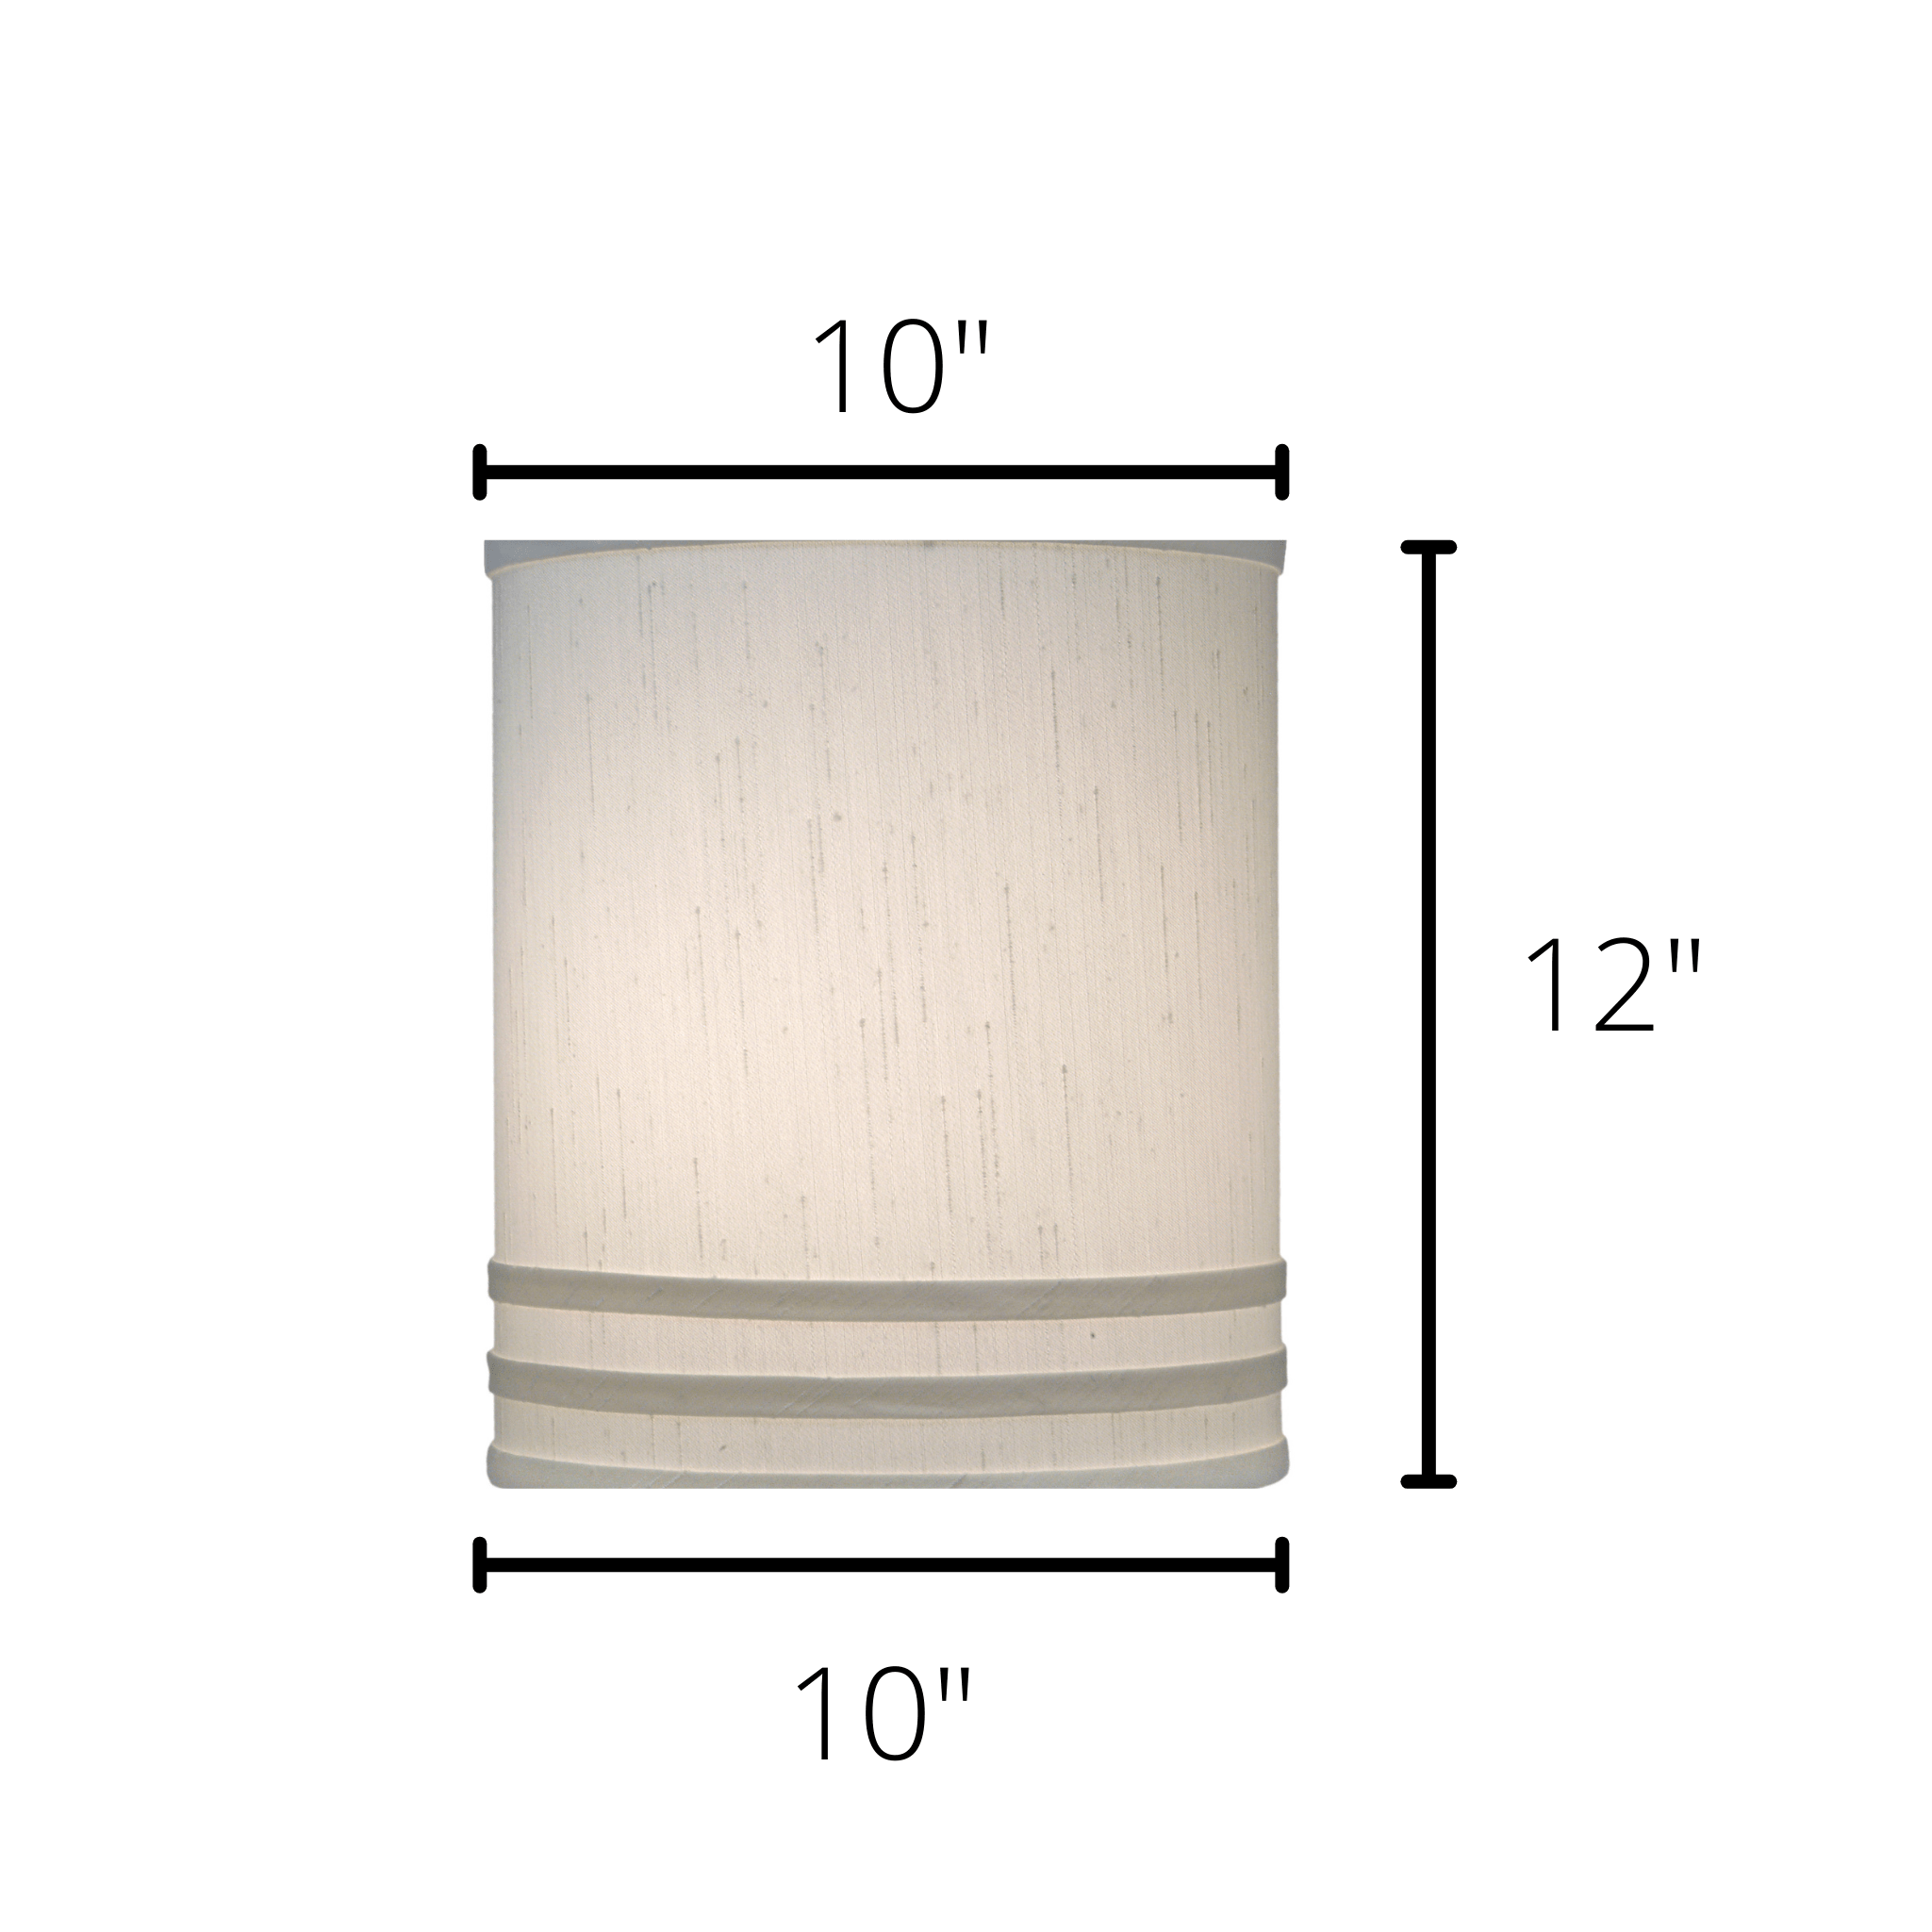 Stiffel lamp shade White Stiffel White Hardback Cylinder Global Lamp shade - 10" x 10" x 12